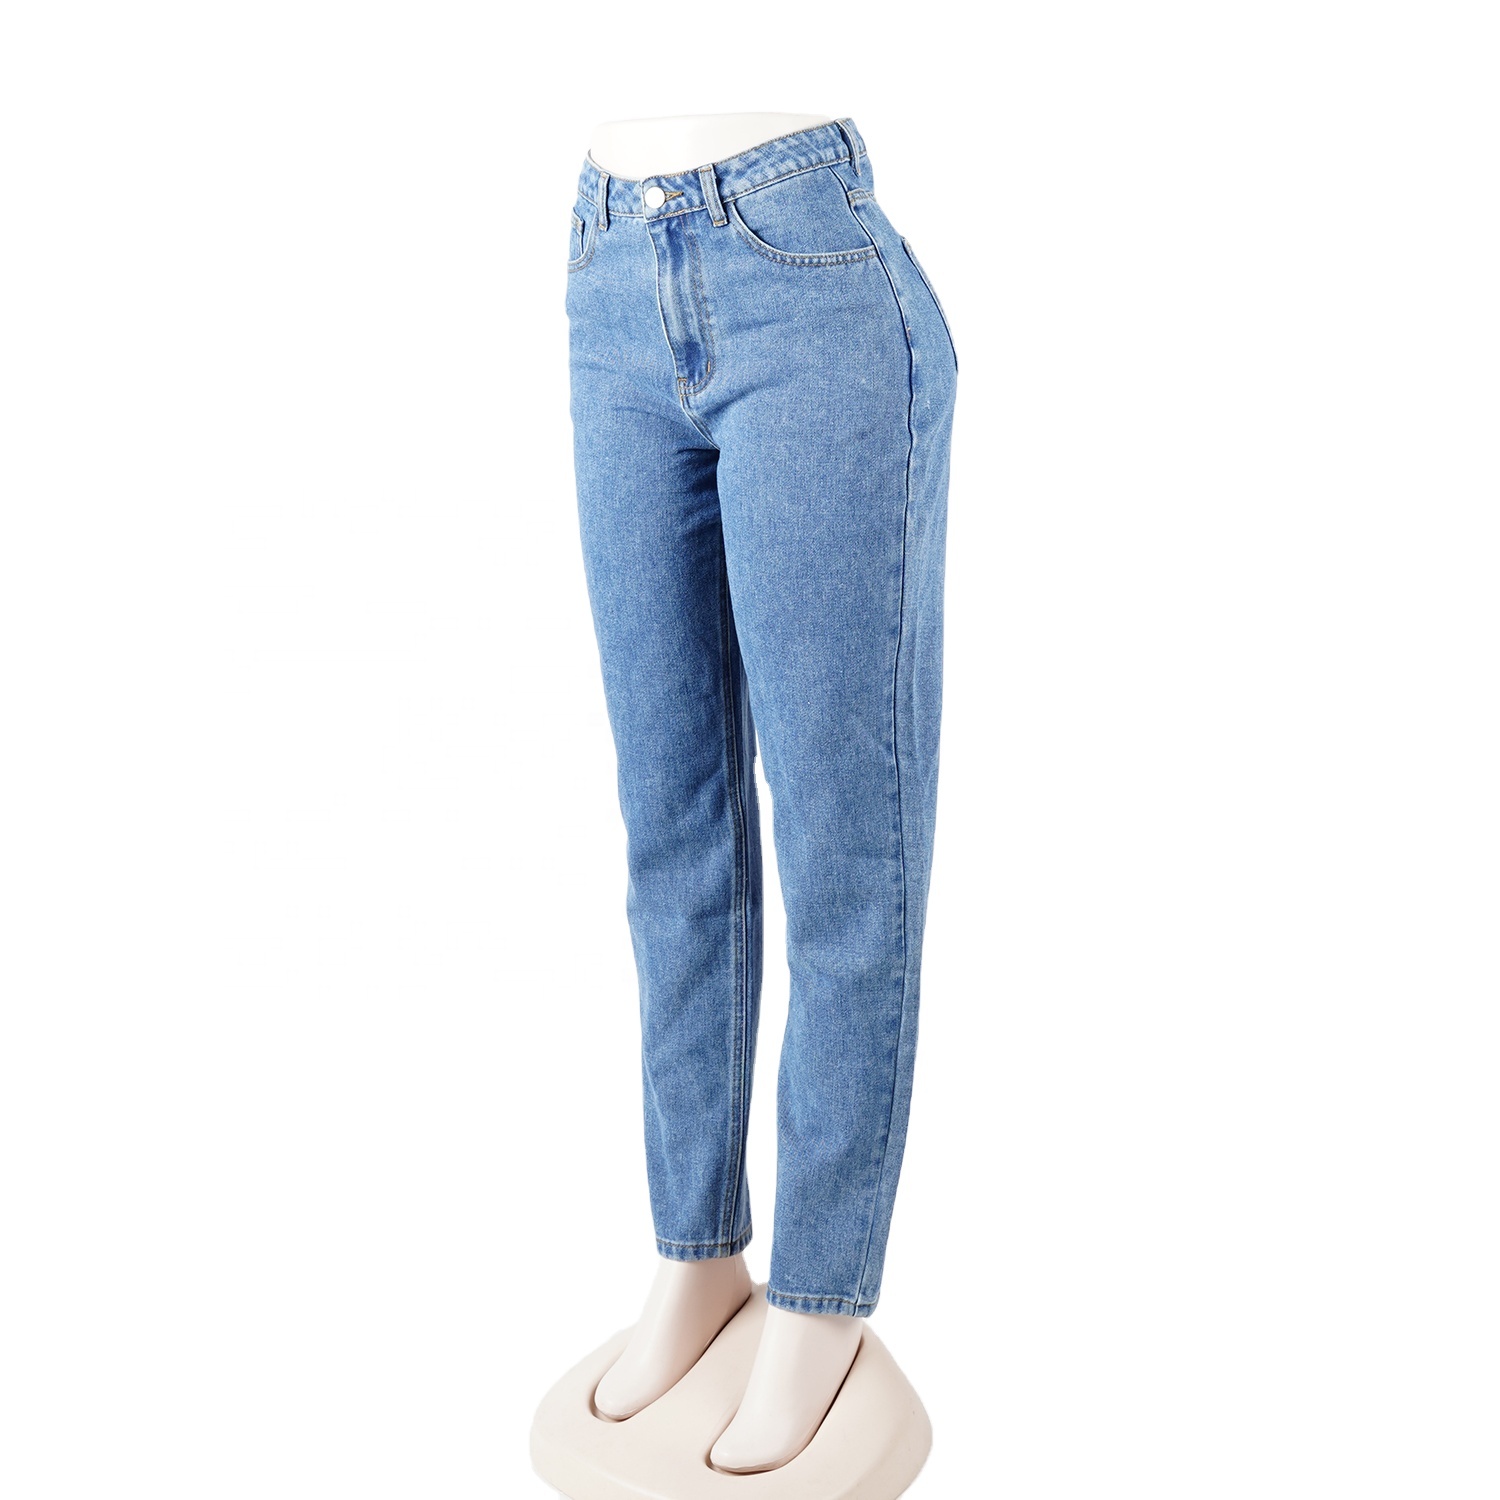 SKYKINGDOM customize design jeans autumn denim blue jeans fashion washed fabrics long jeans for women